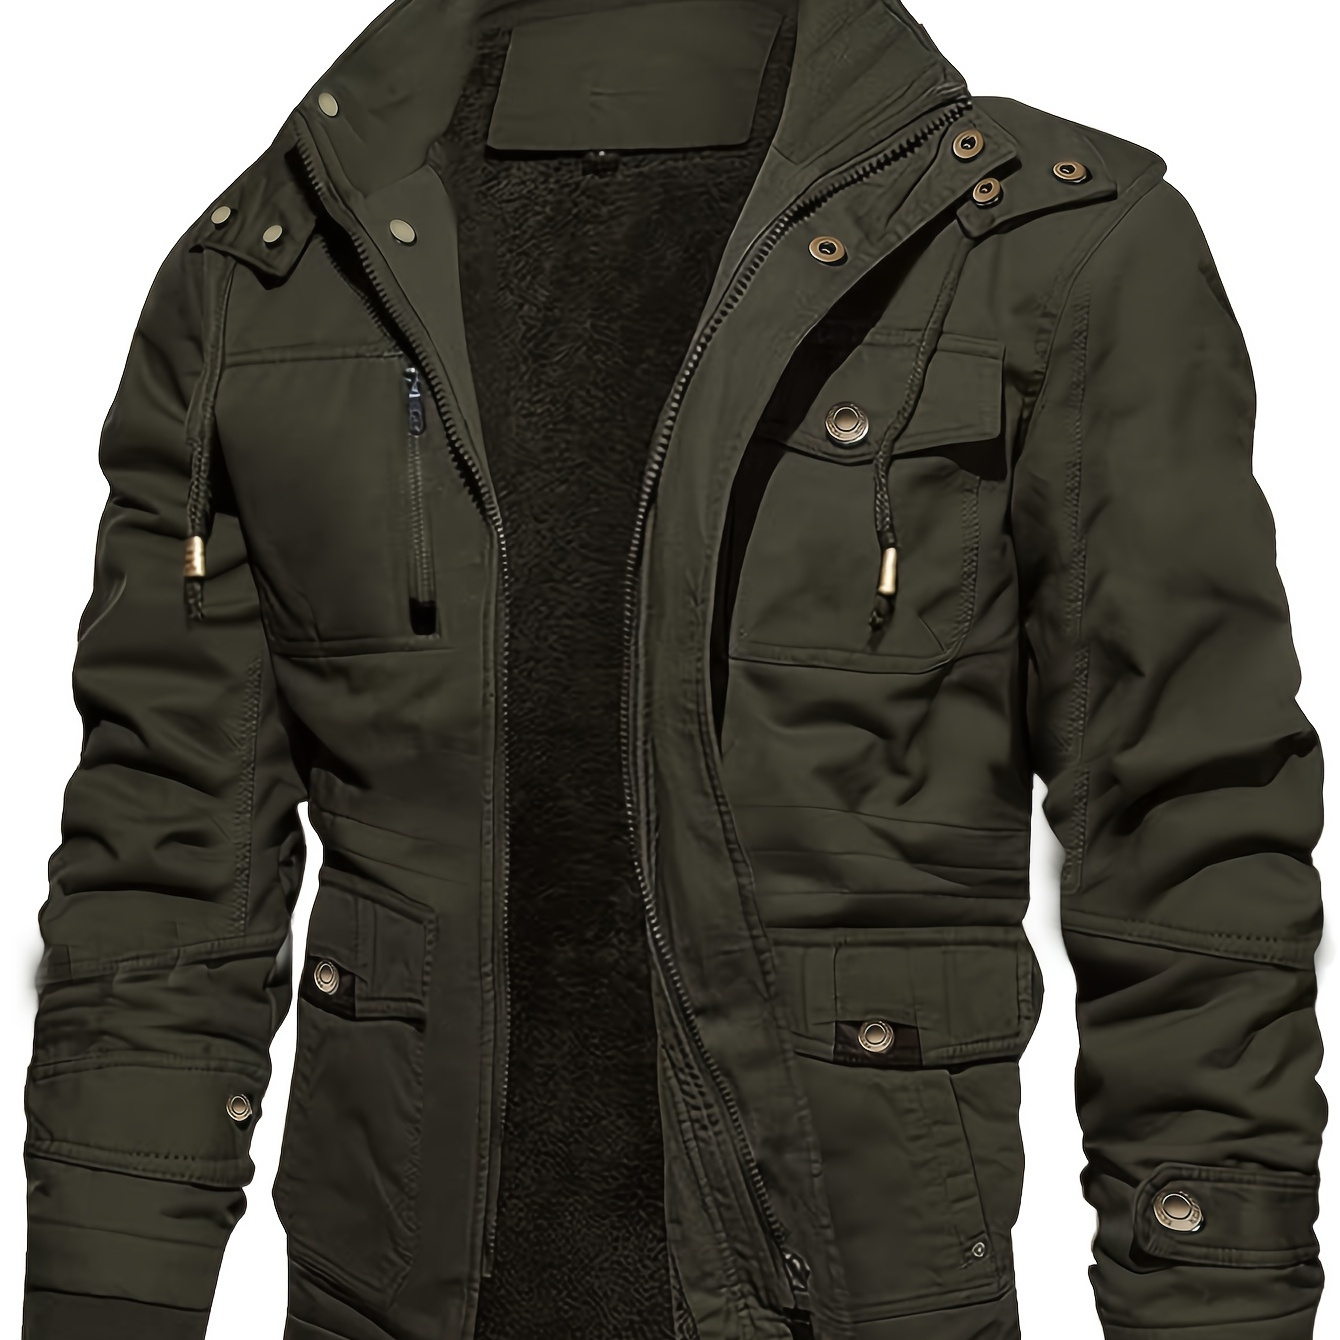 

Men's Casual Warm Fleece Lined Cargo Jacket, Chic Multi Pocket Jacket For Fall Winter